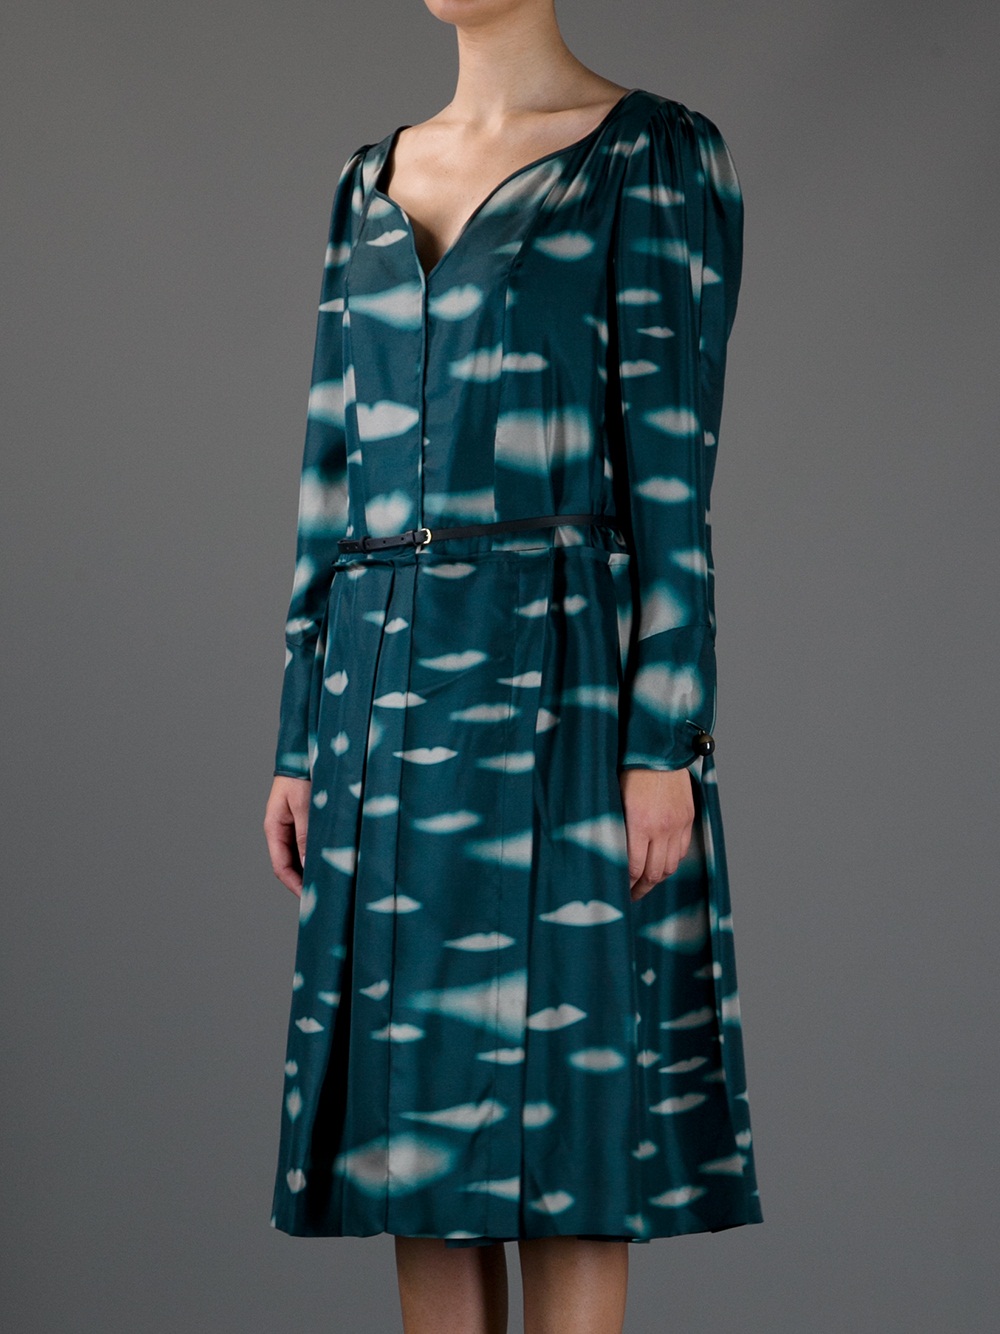 Lyst - Sonia rykiel Printed Dress in Blue